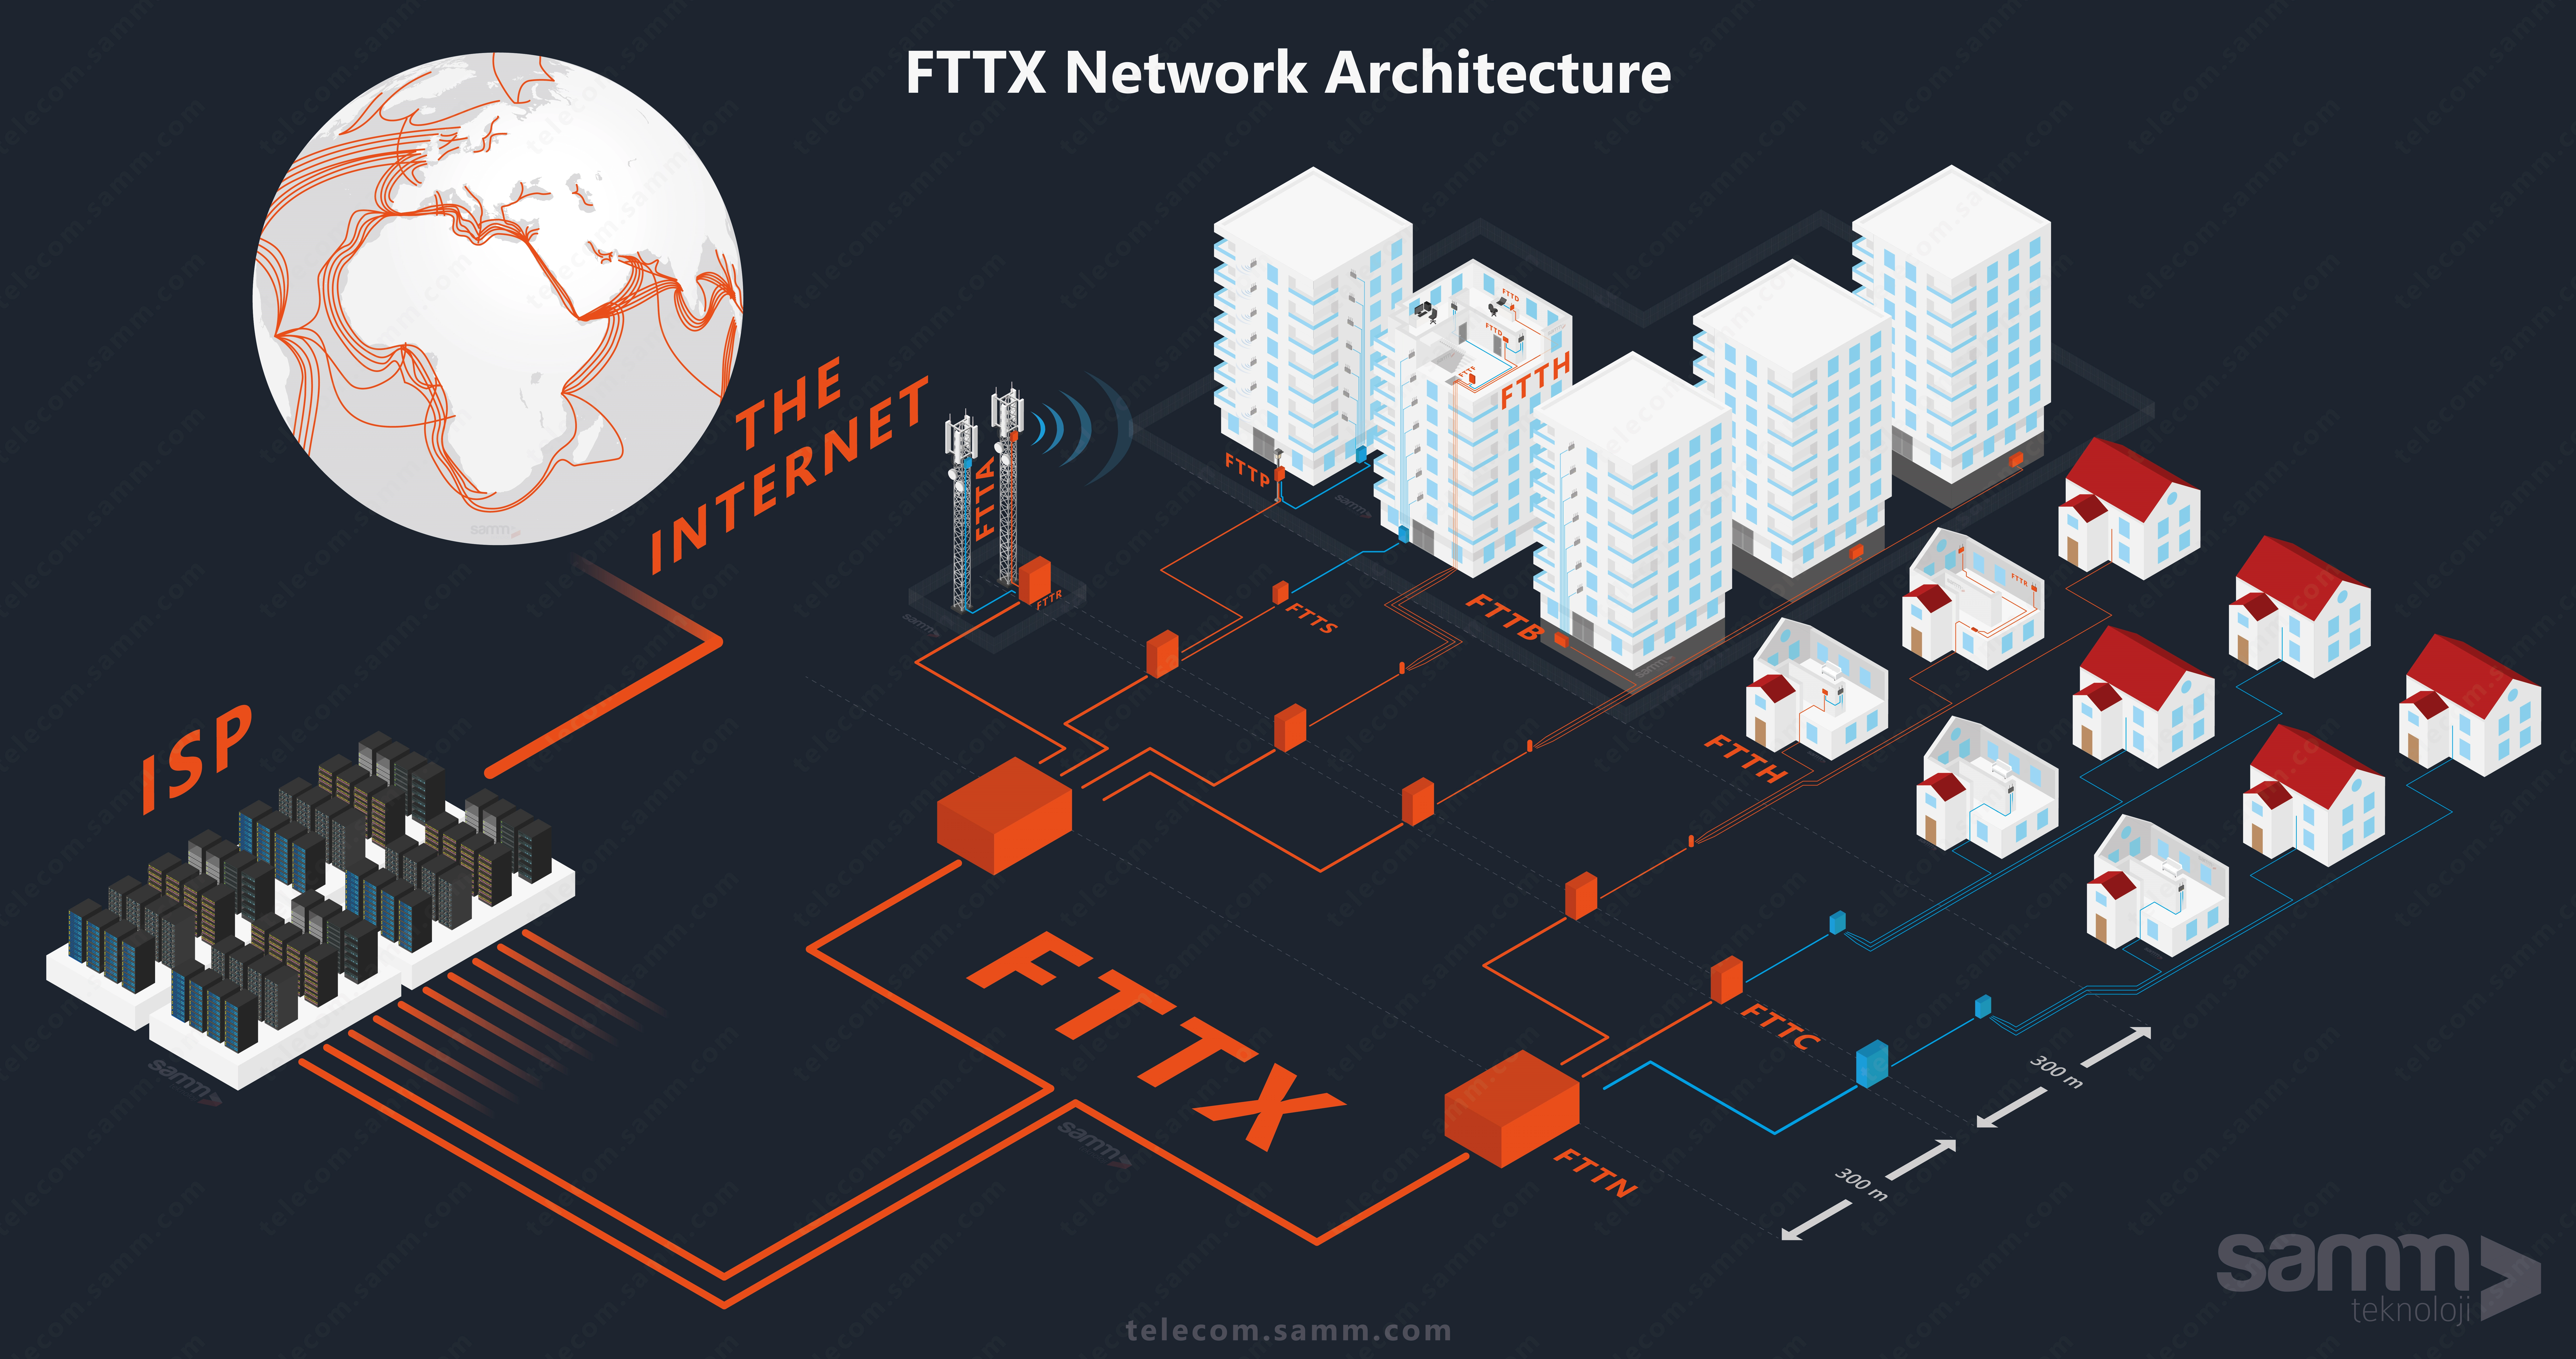 İnternet Nedir? FTTX ve FTTH ne demek? FTTX (X'e Fiber), FTTN, FTTC/FTTK, FTTB, FTTH, FTTP, FTTS, FTTD, FTTR, FTTS ve FTTA gibi diğer tüm benzer terimleri içerir.